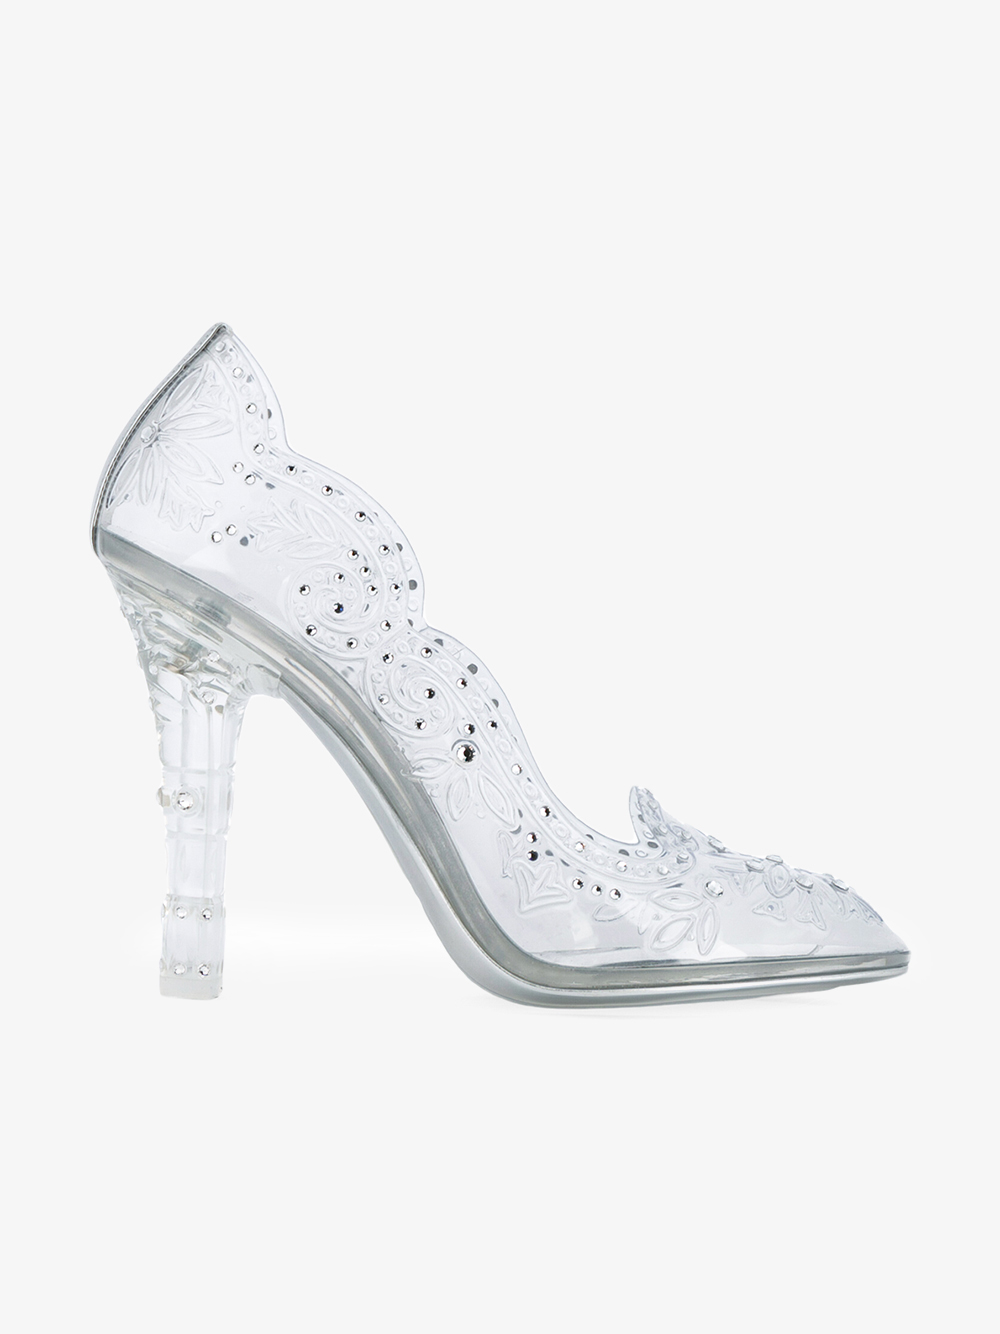 Dolce & Gabbana Clear Cinderella Heels in Metallic | Lyst